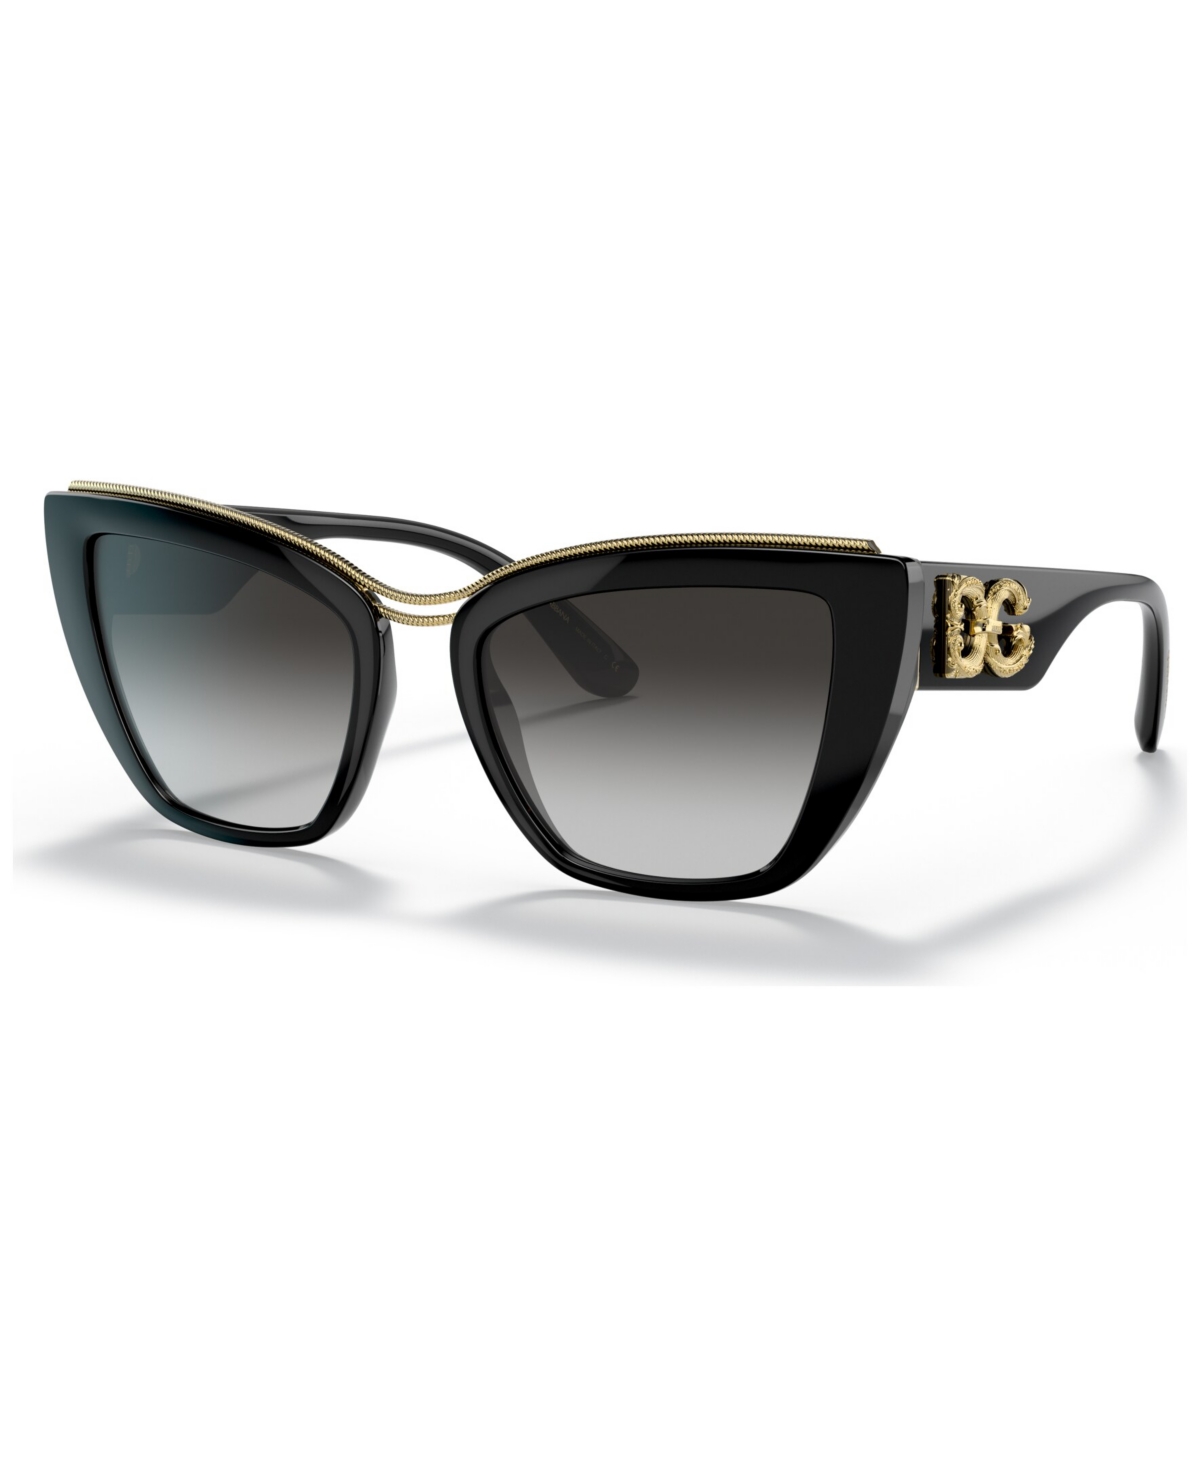 Dolce&Gabbana Women's Sunglasses, Gradient DG6144 - Black